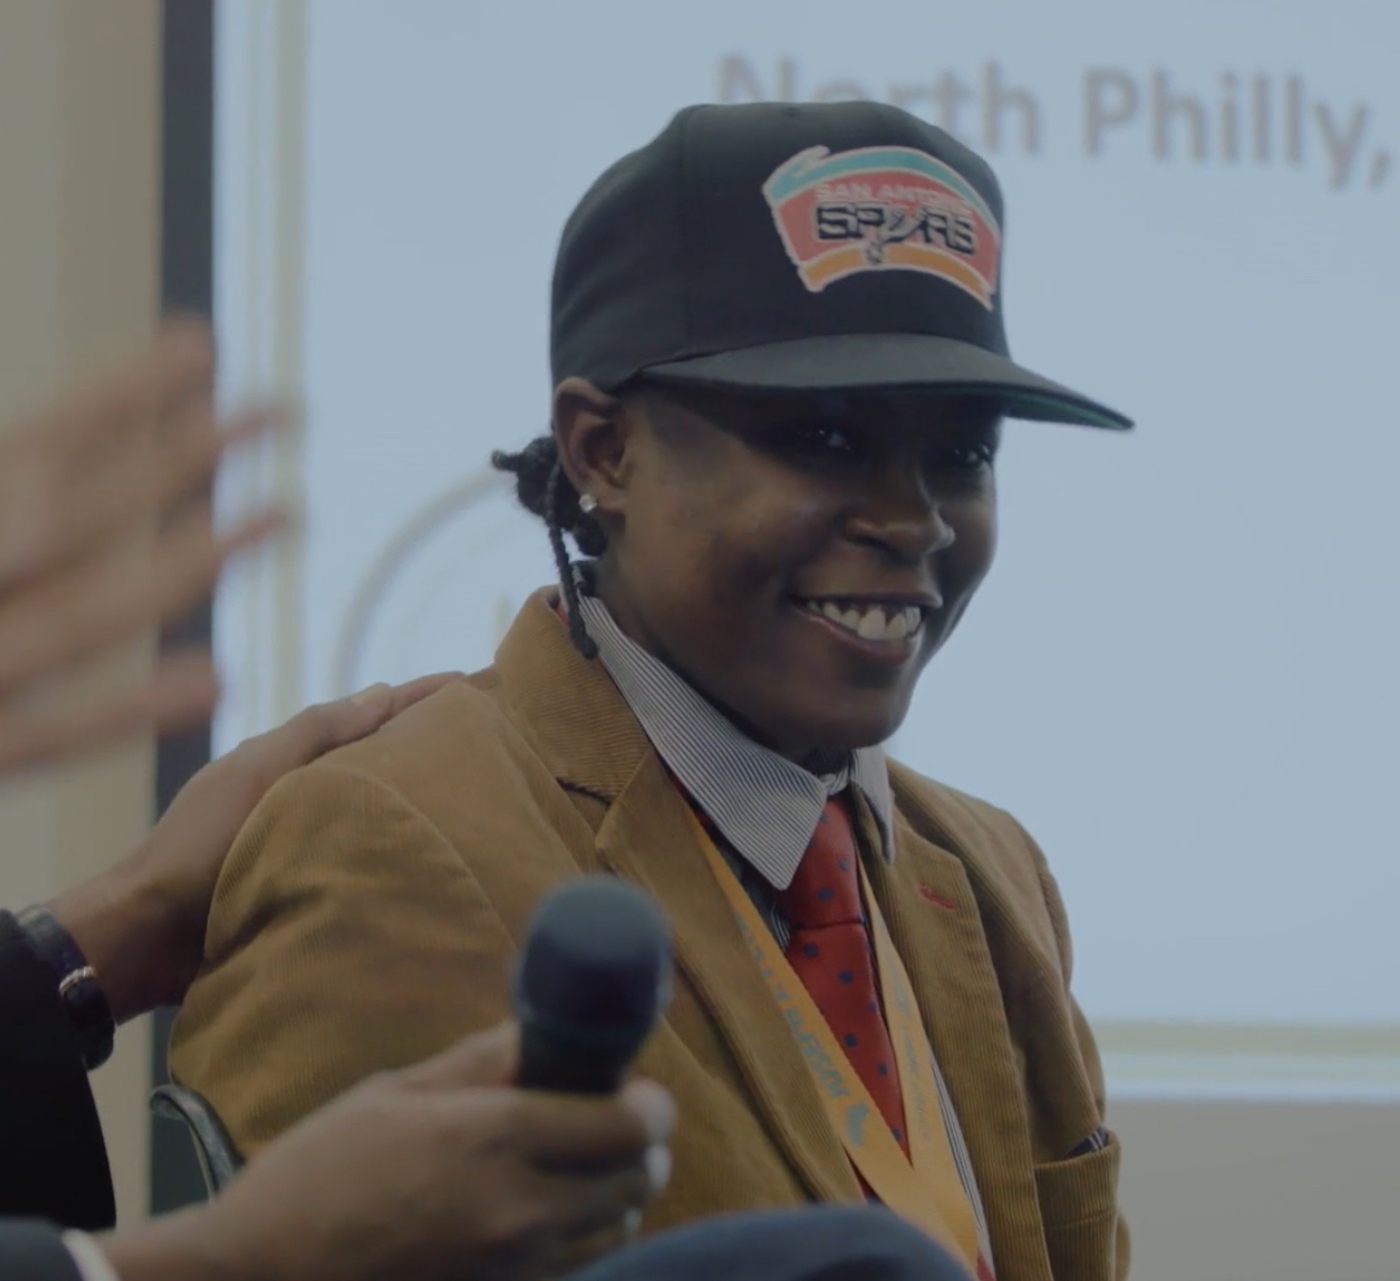 Woman (LaTonya Myers) in a San Antonio Spurs hat, celebrates a job offer